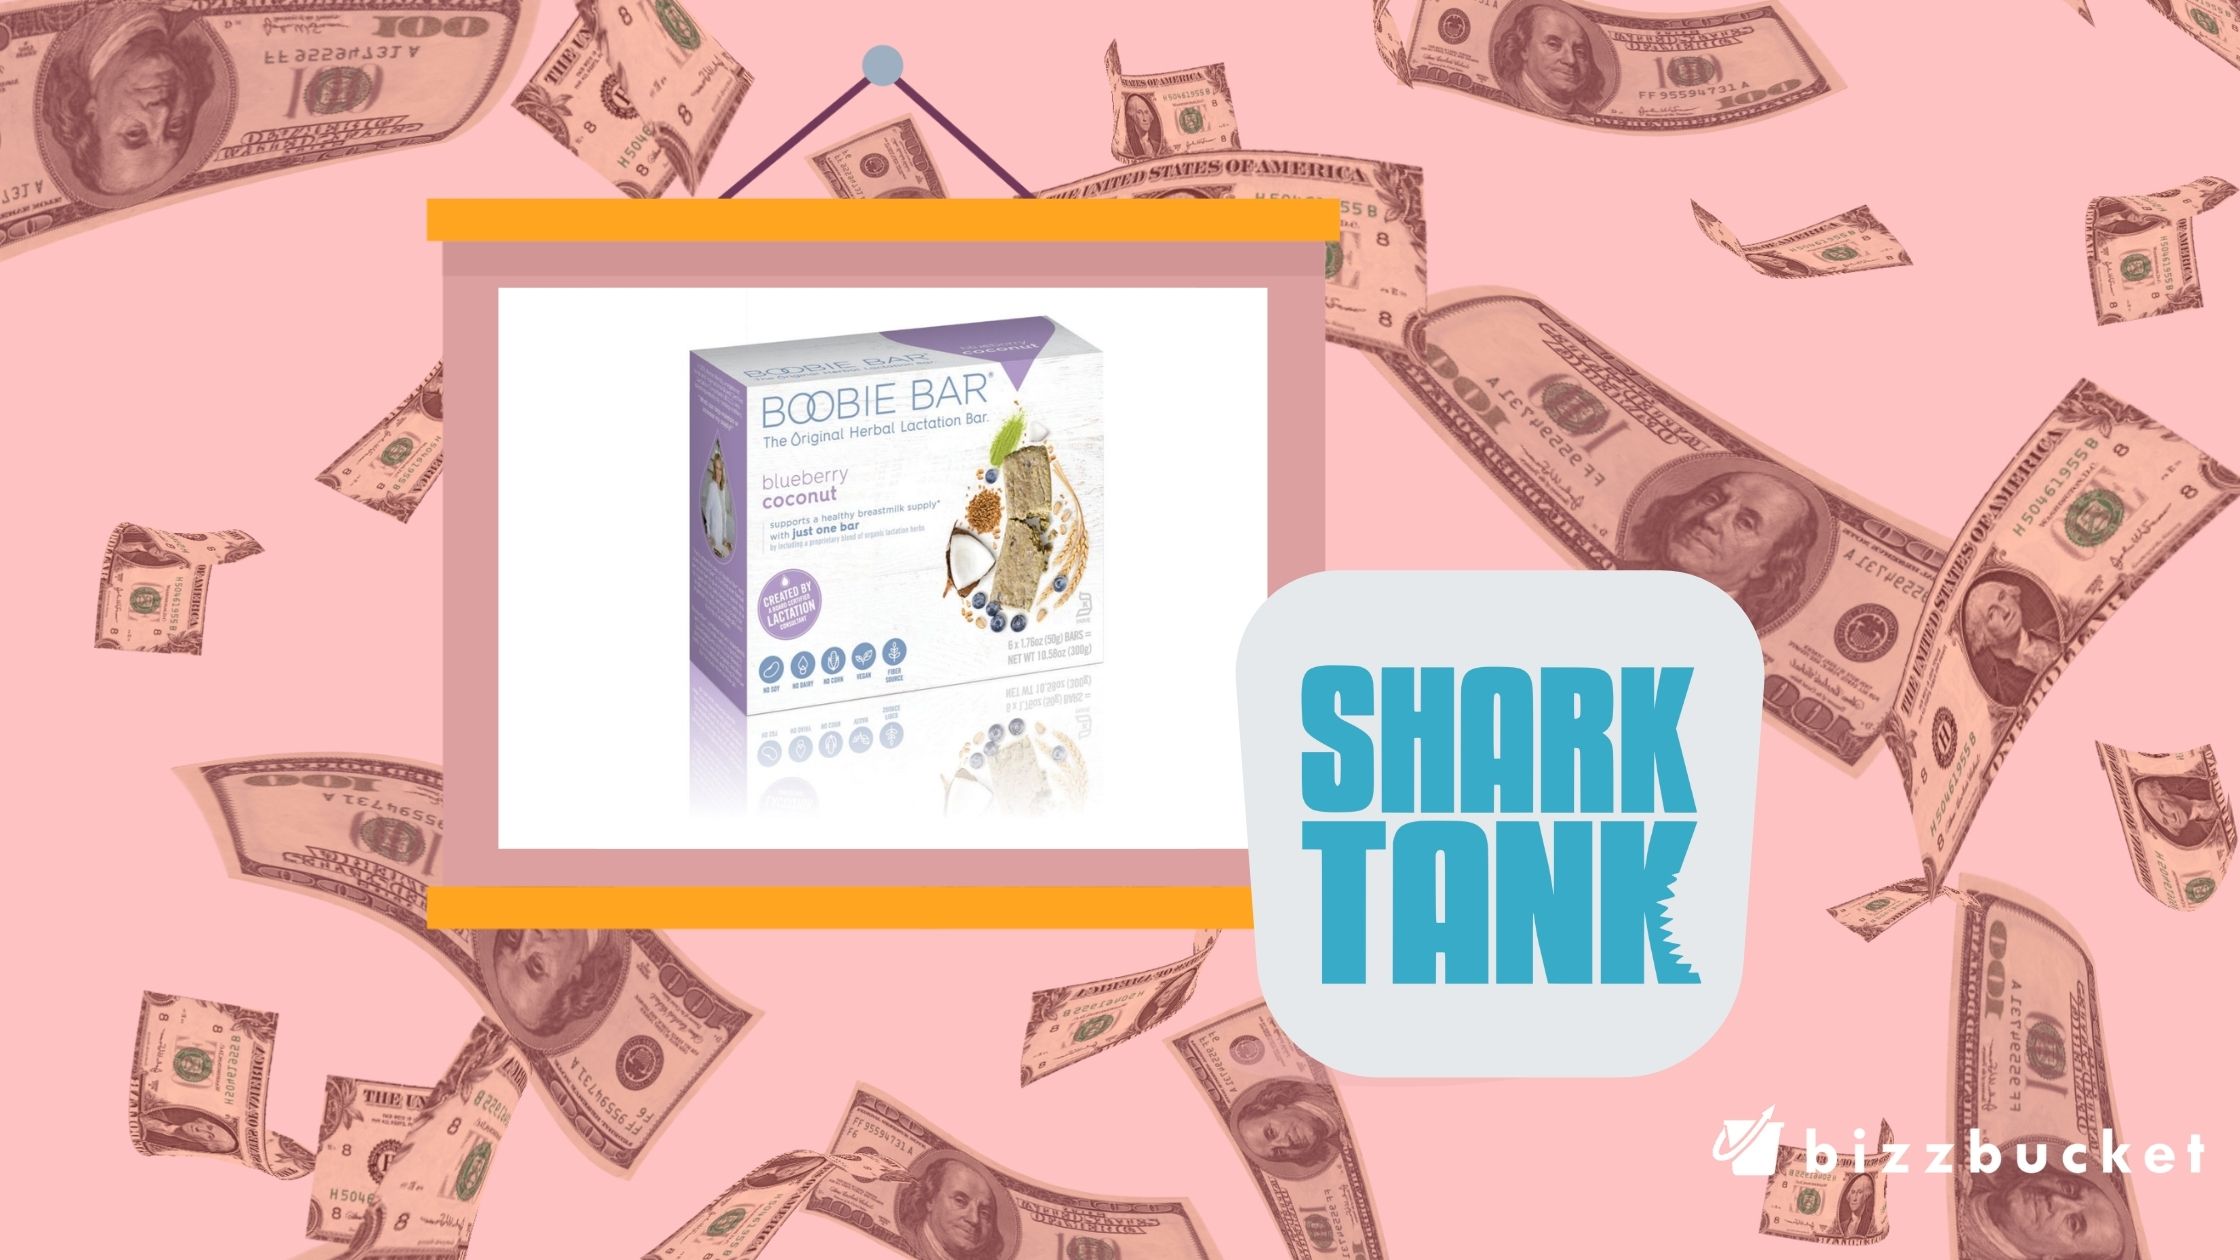 Boobie Bar shark tank update